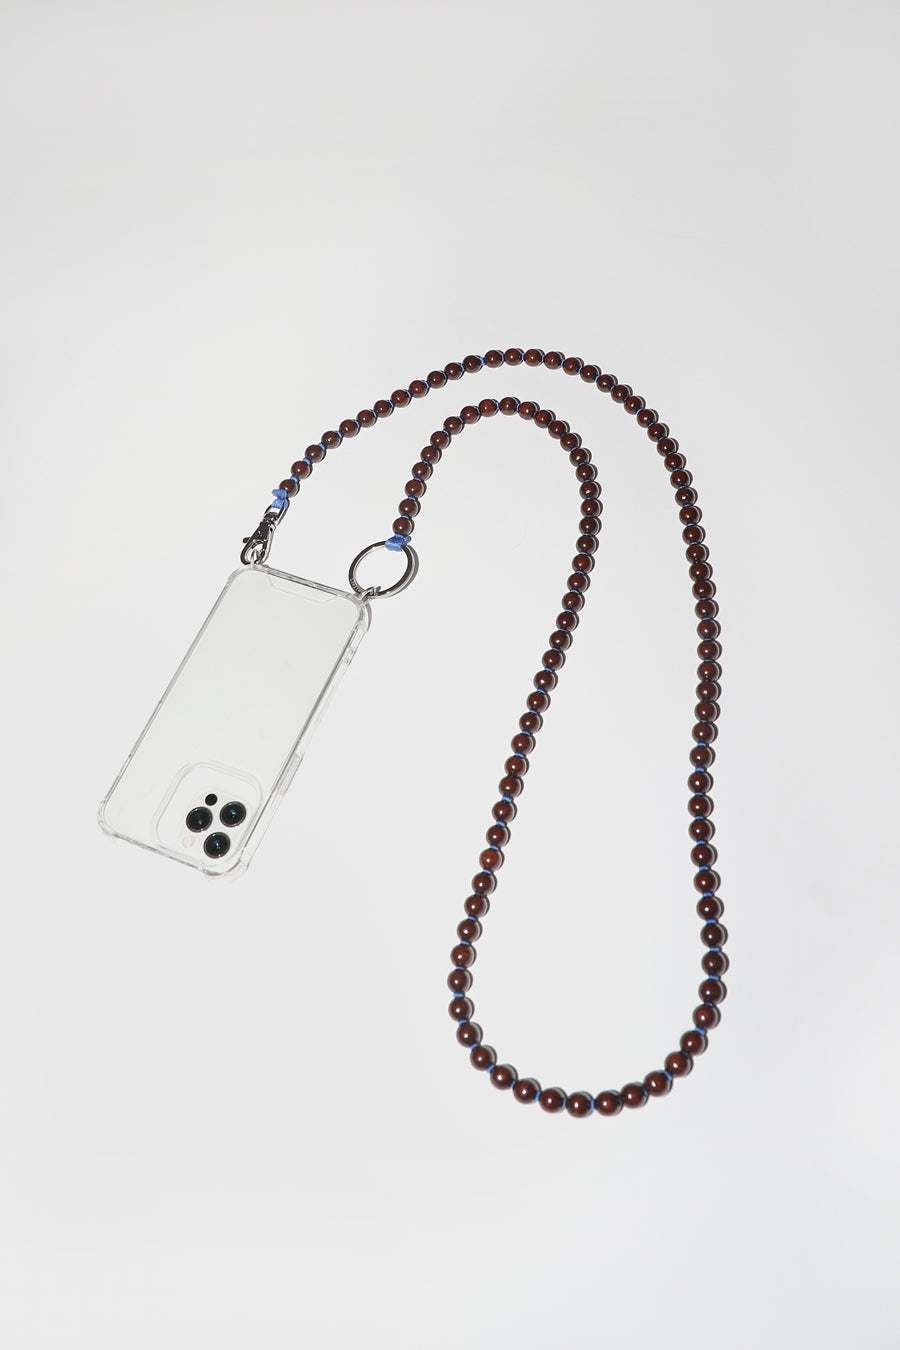 Ina Seifart Handykette Iphone Necklace in Dark Brown with Blue Thread